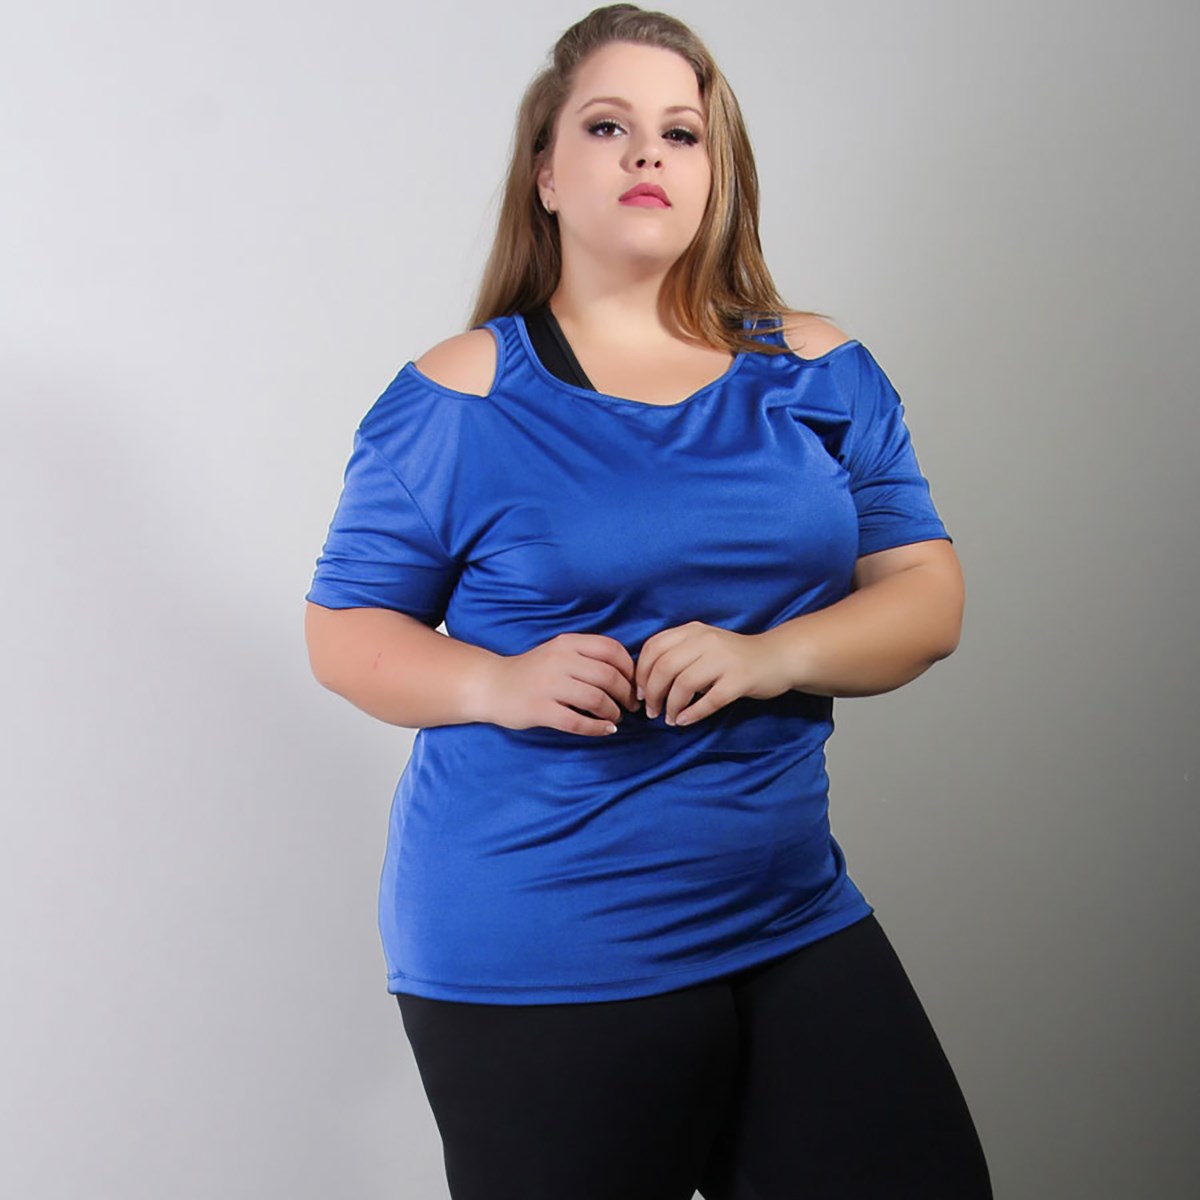 Blusa Fitness Plus Size Azul em Dry Fit | Ref: 4.4.1751-06